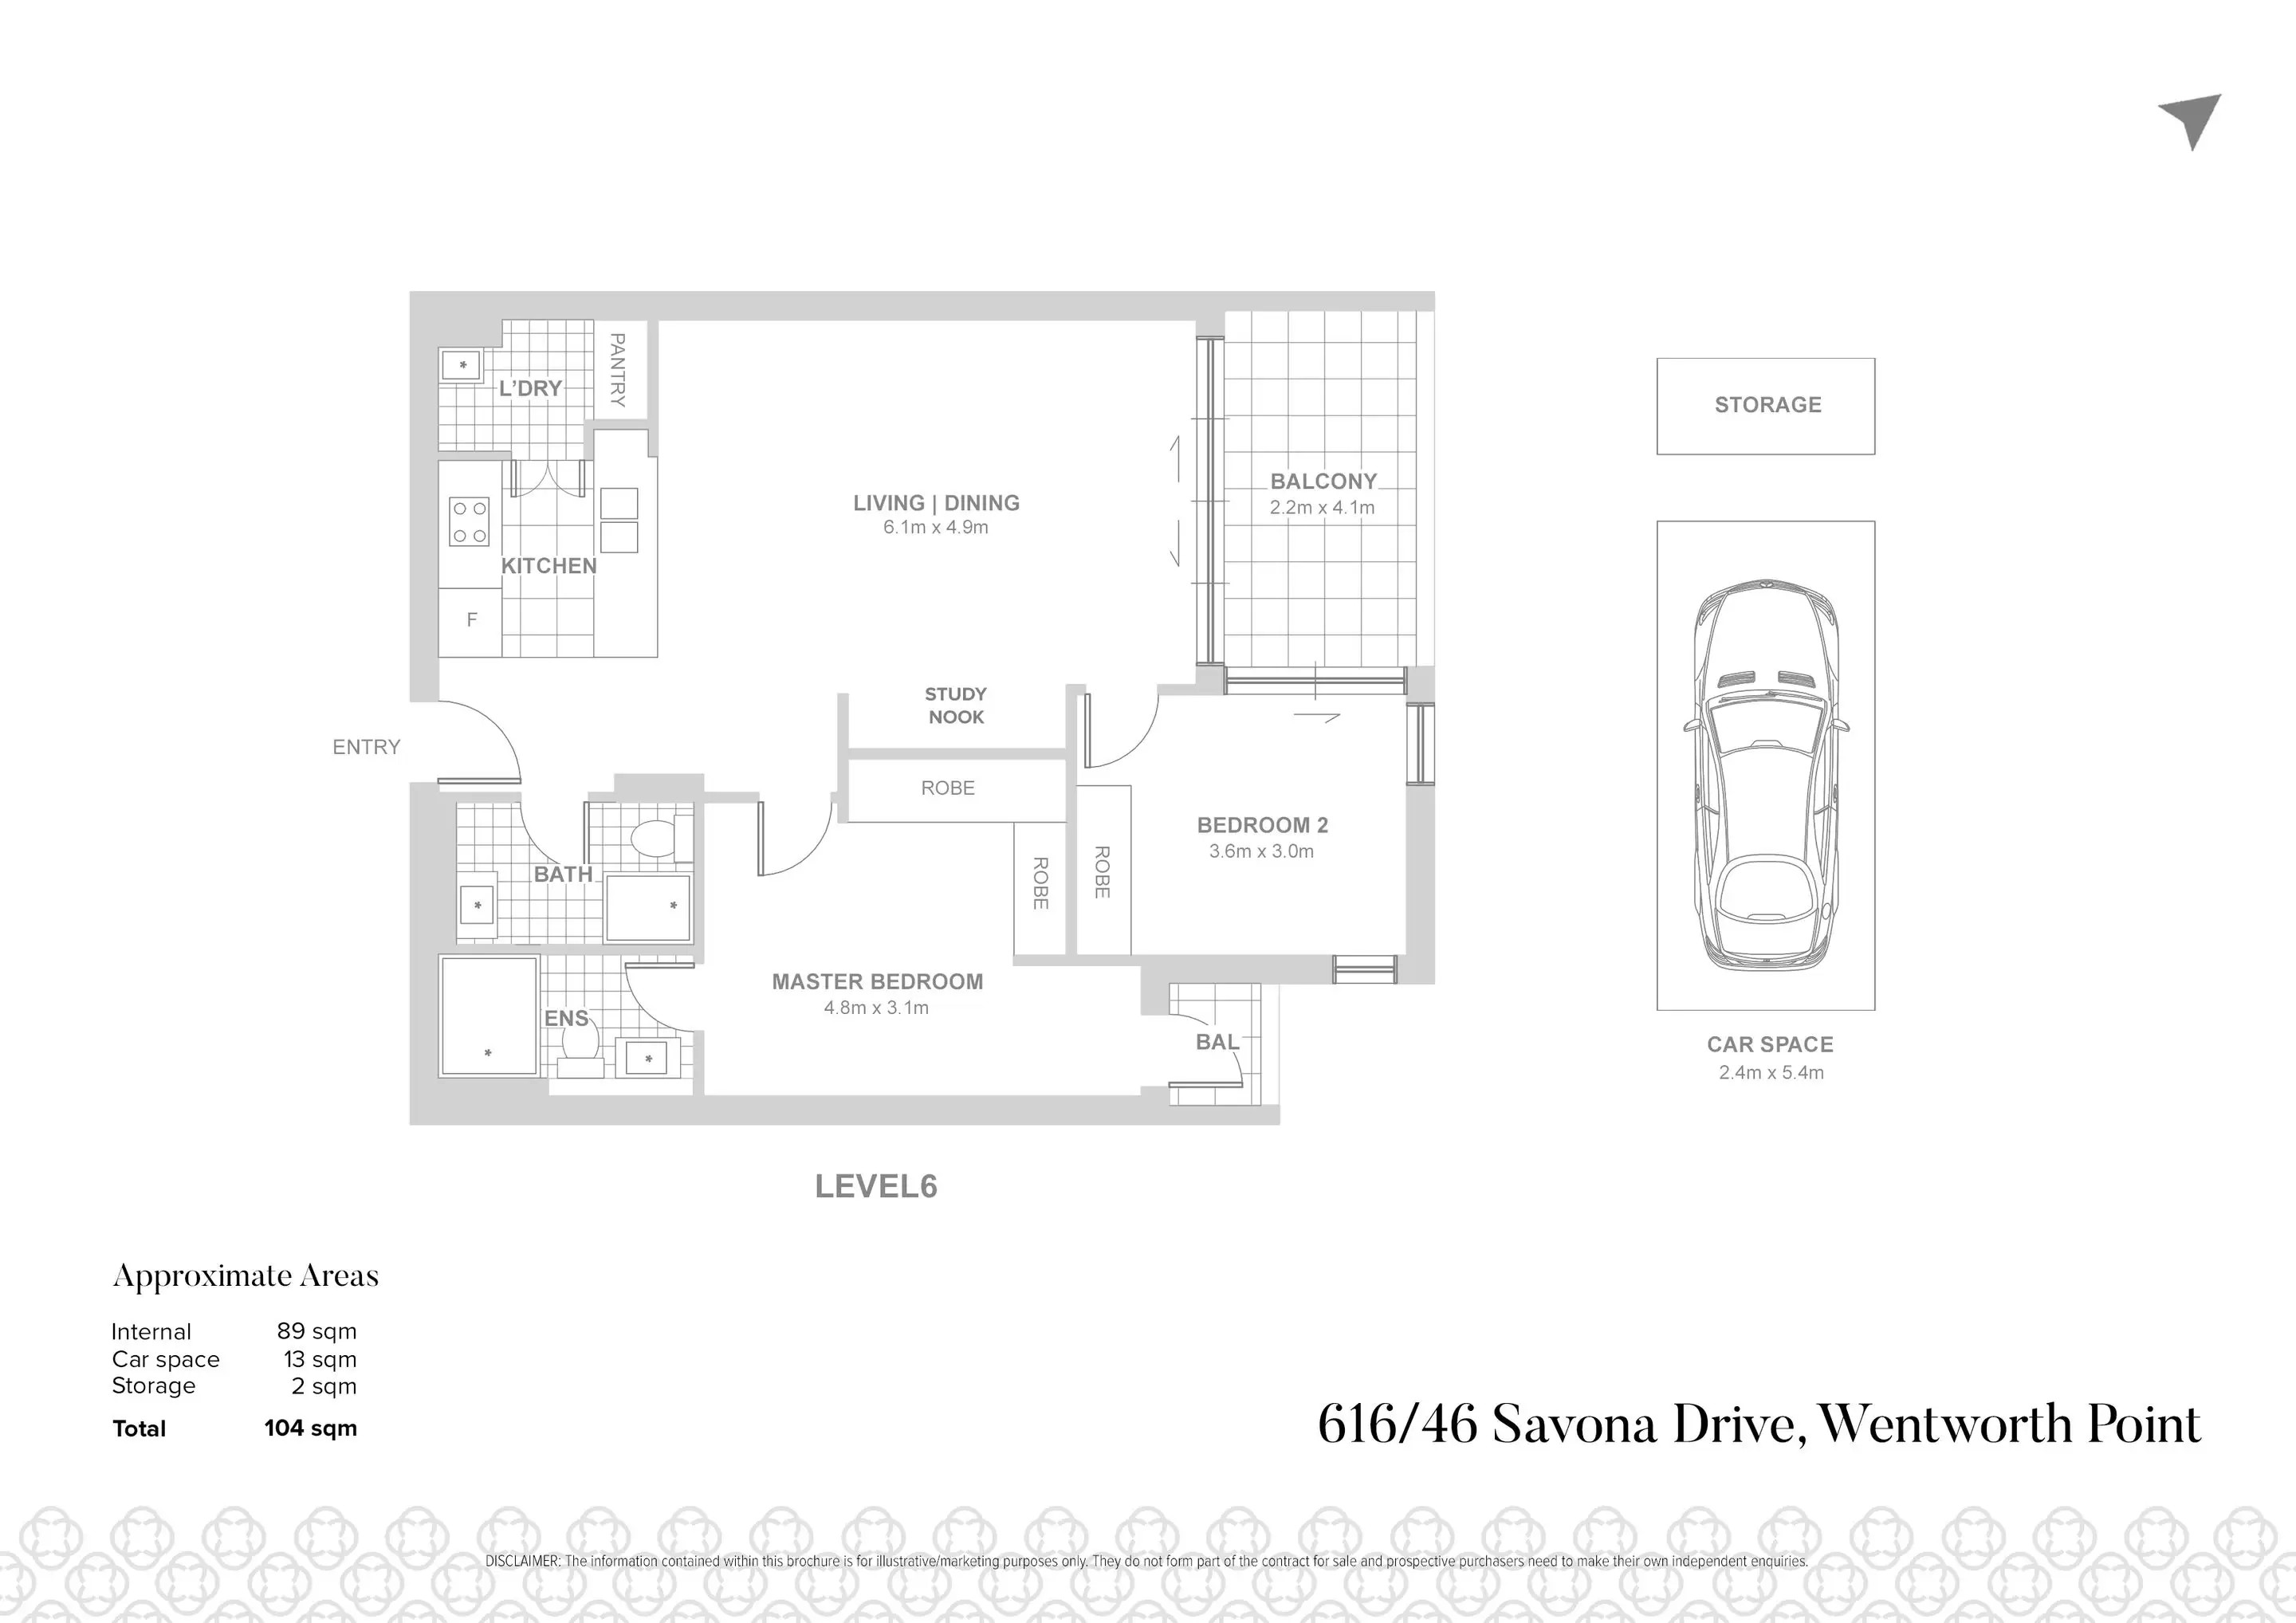 616/46 Savona Drive, Wentworth Point Sold by Chidiac Realty - floorplan